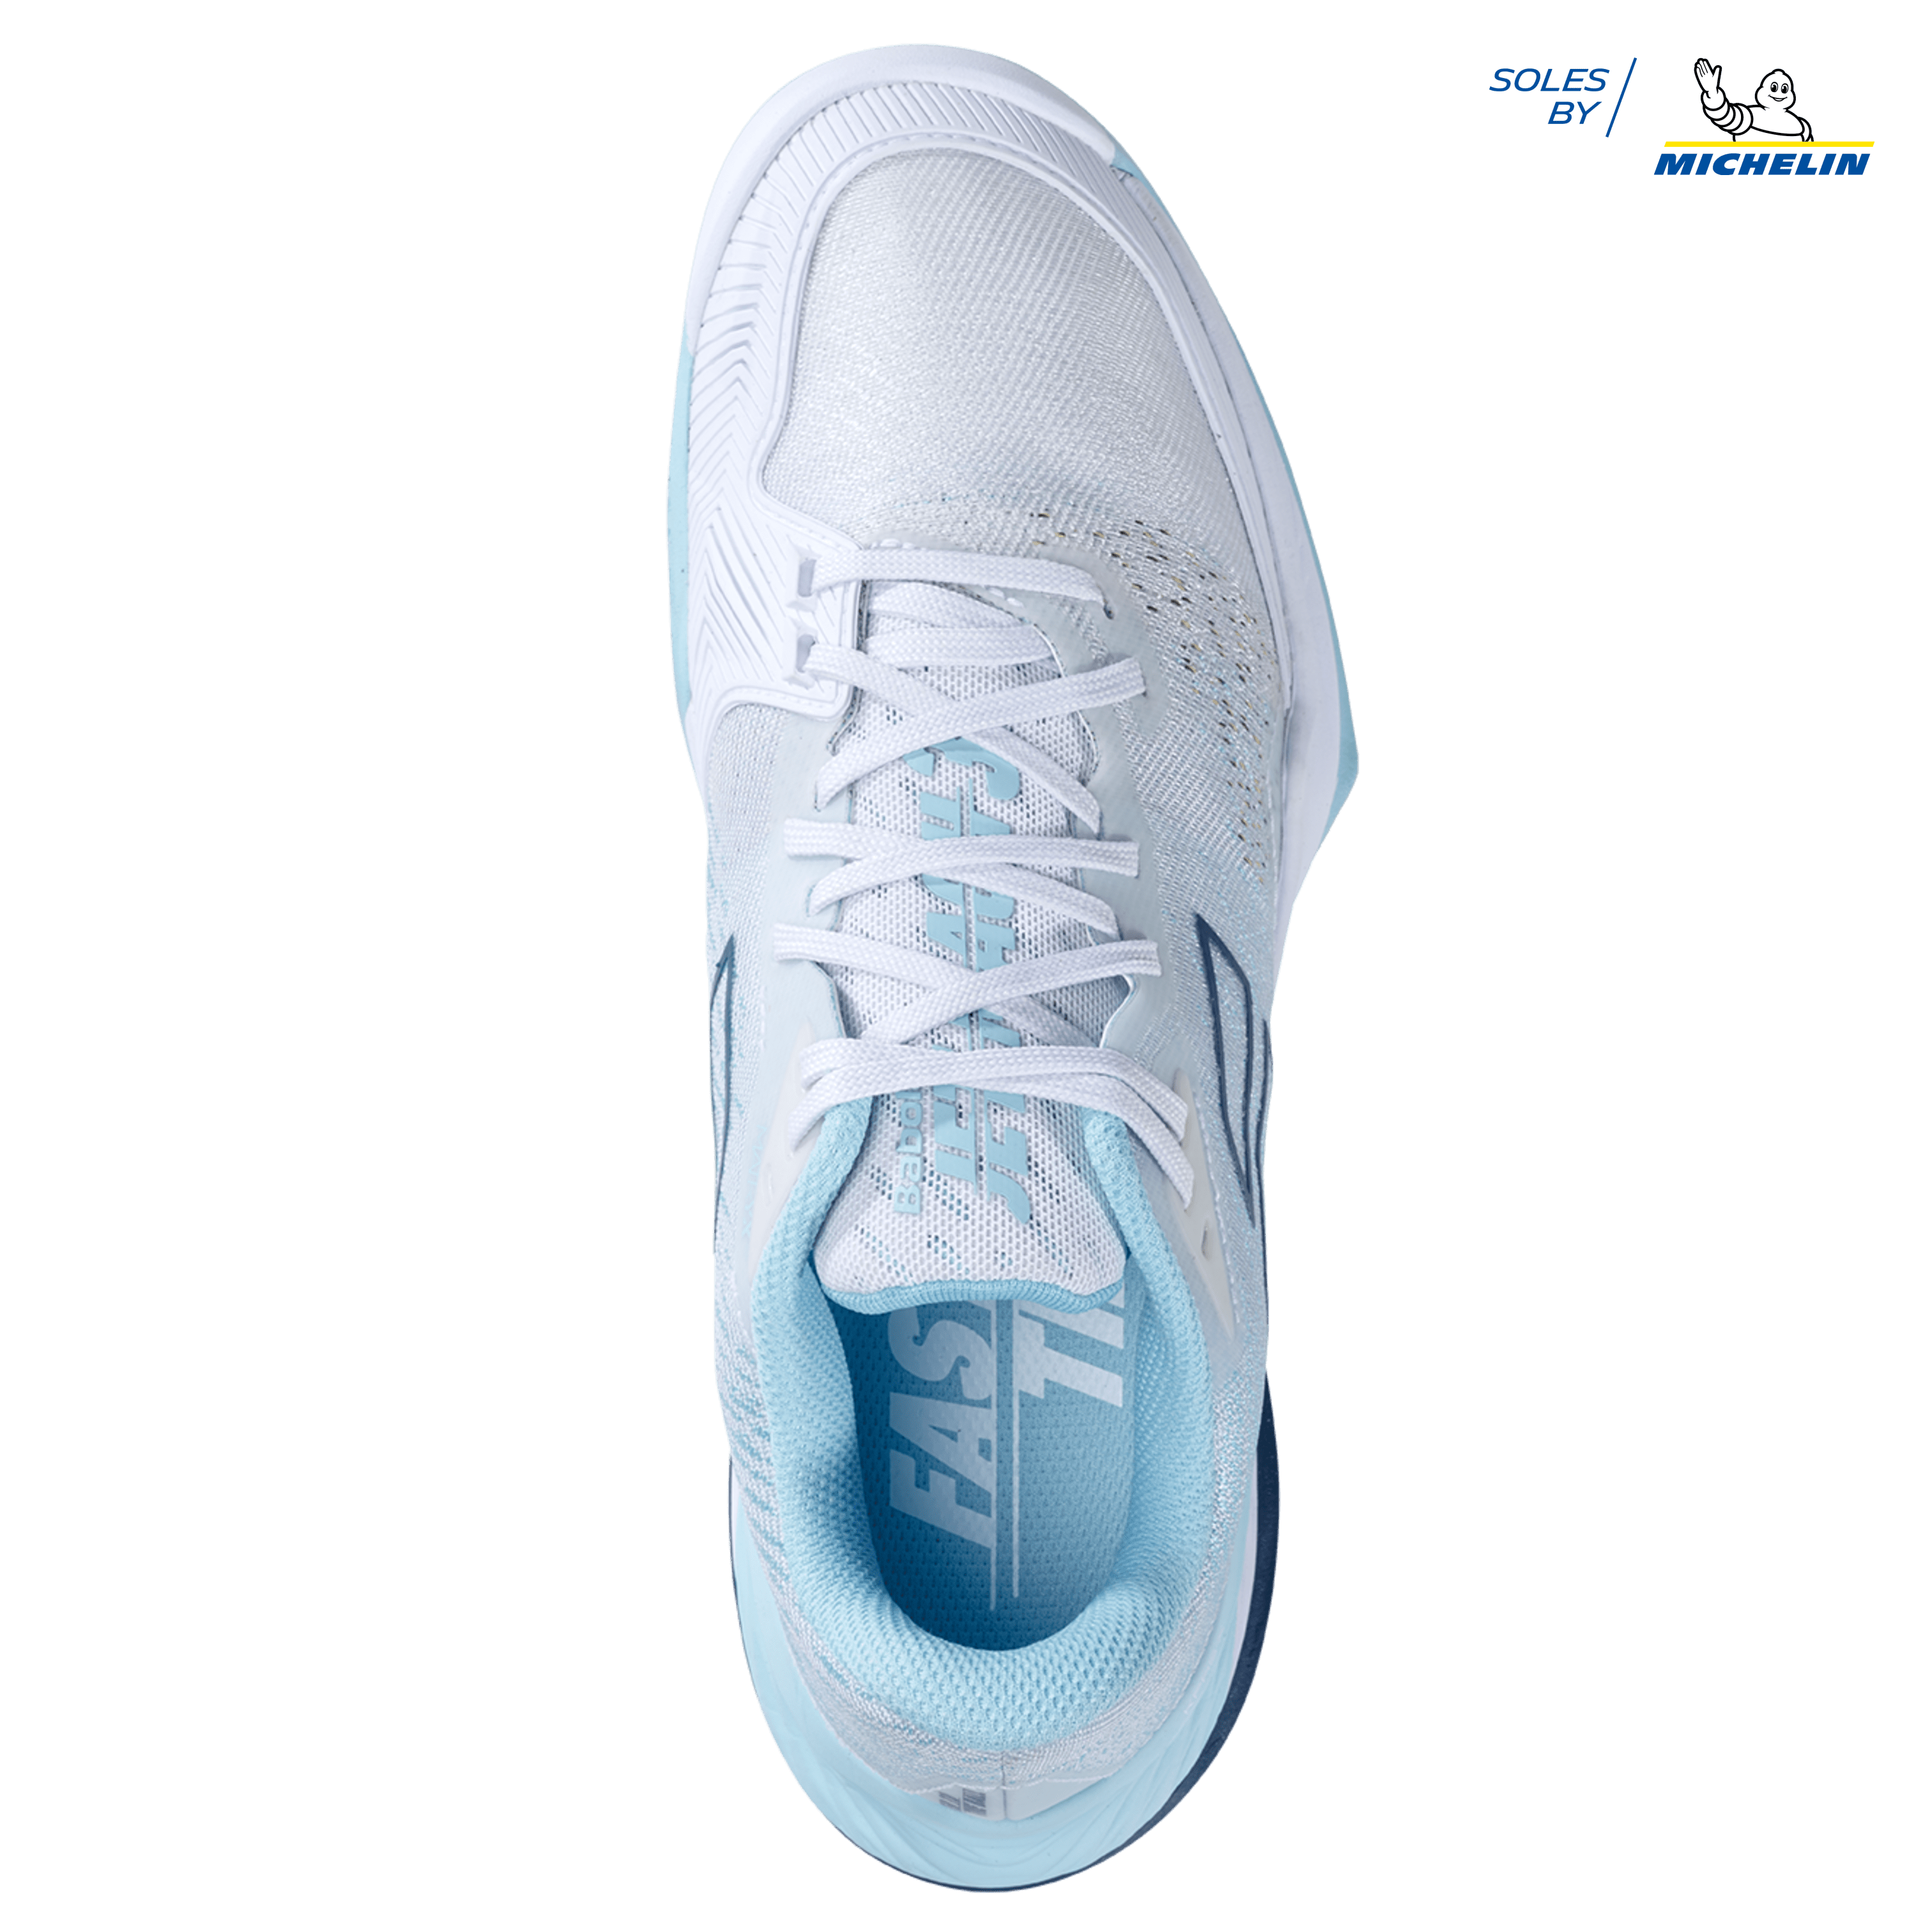 Sports shoes - OTTIMO - The luxury shoe